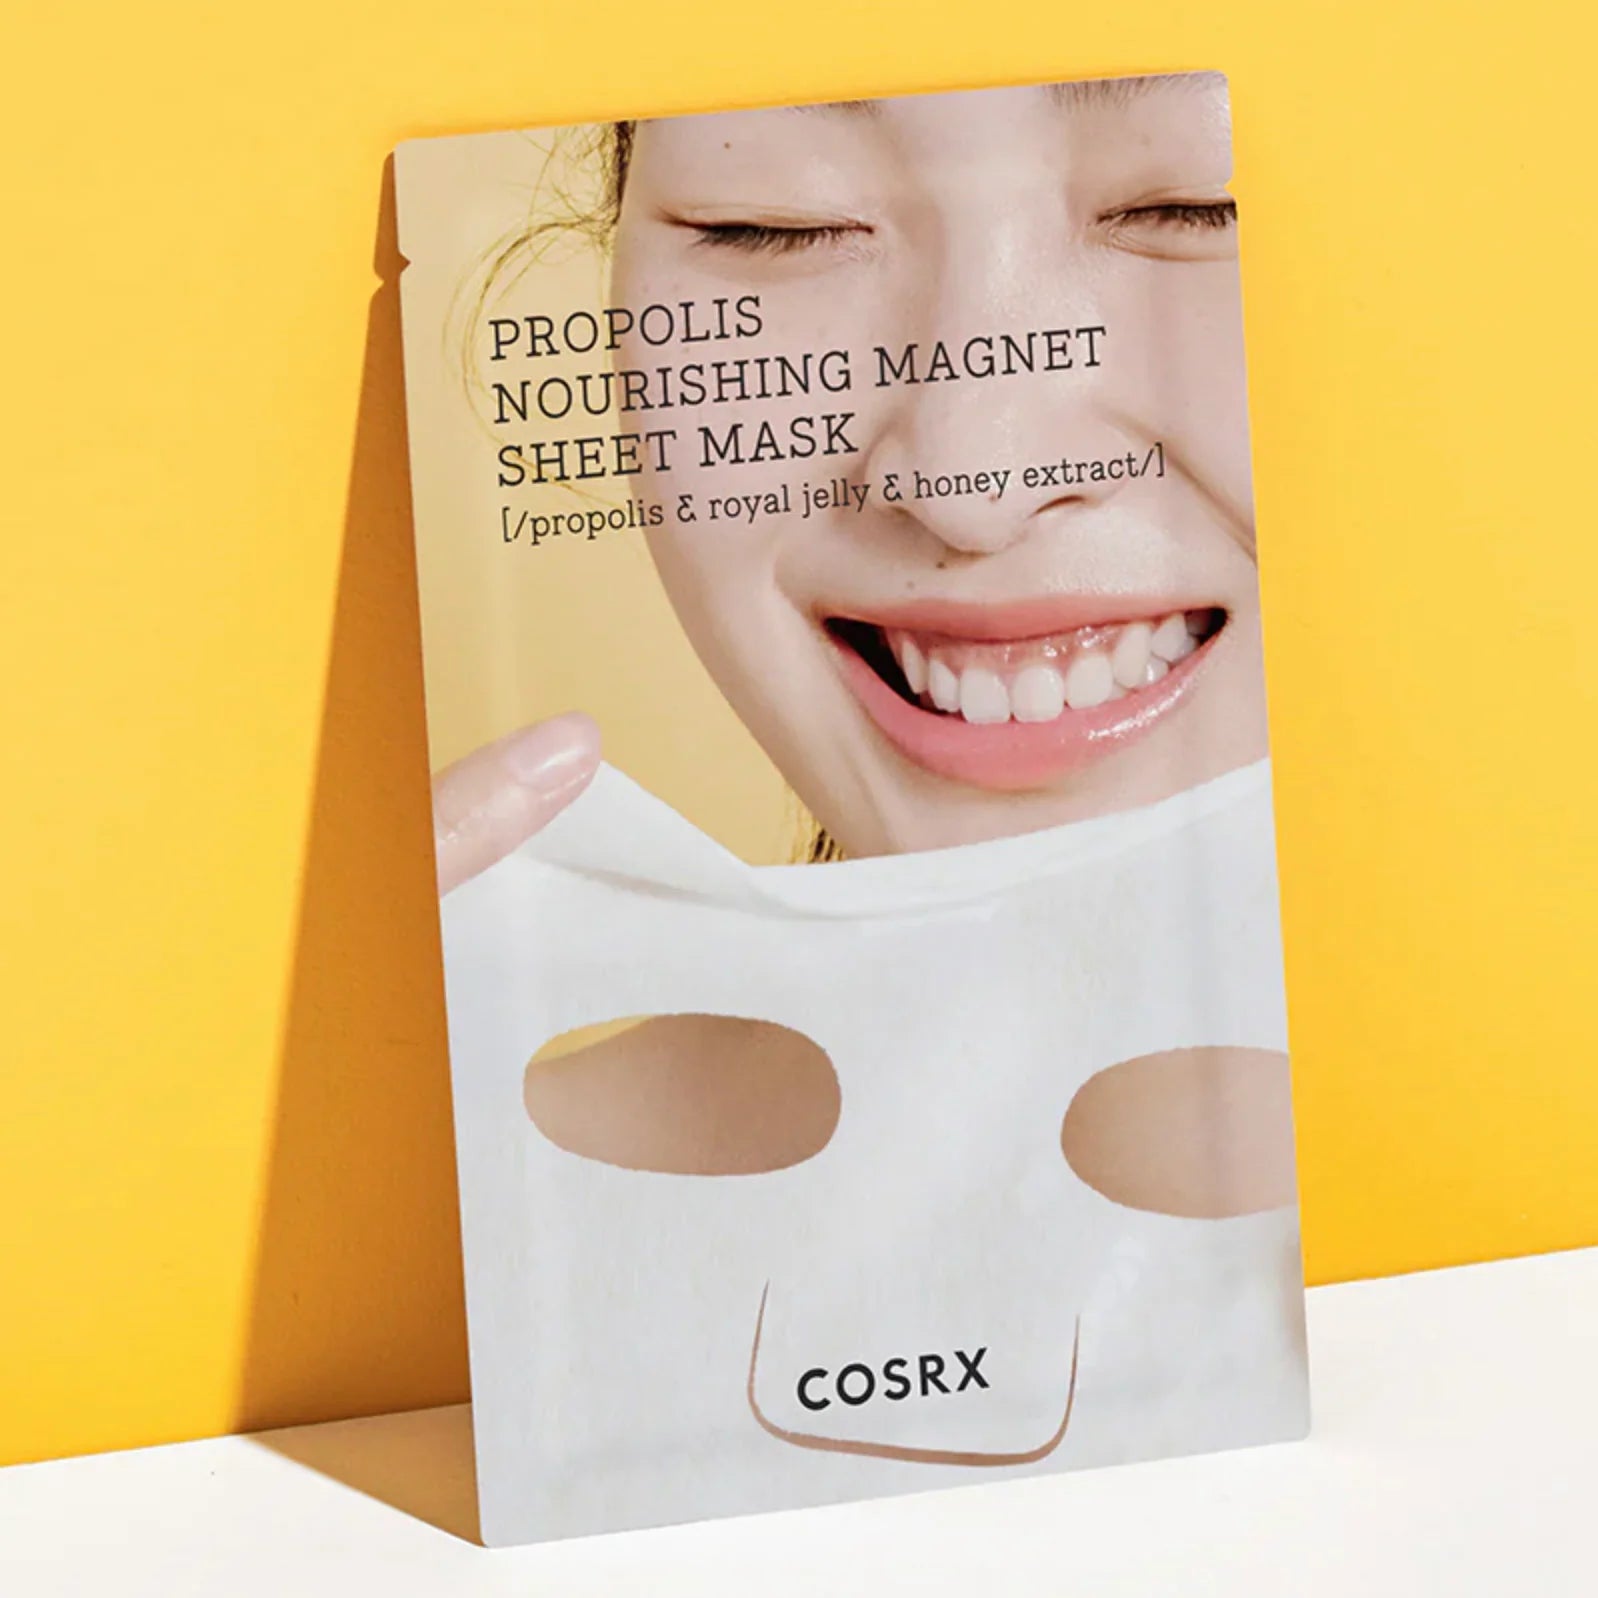 COSRX Sheet mask